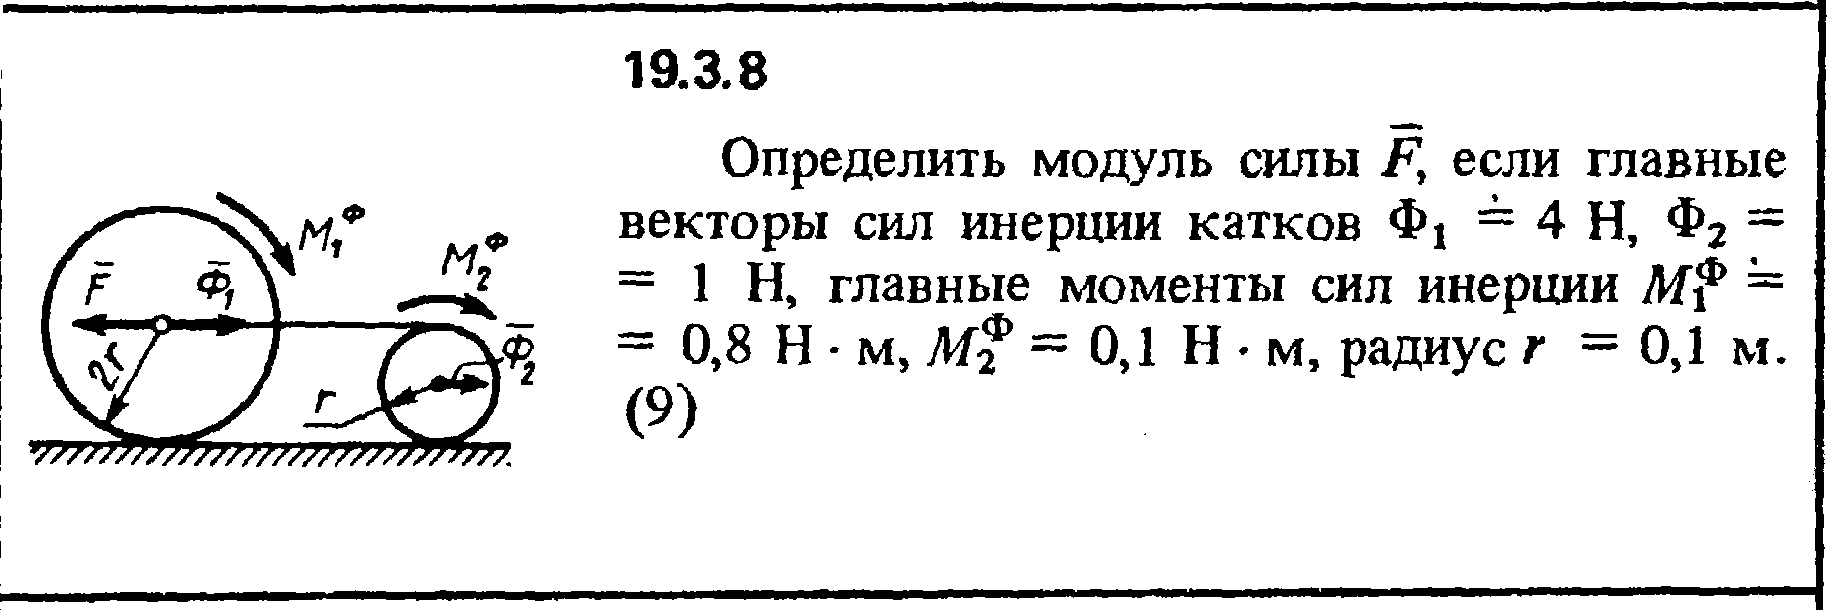 Решение 19.3.8 из сборника (решебника) Кепе О.Е. 1989